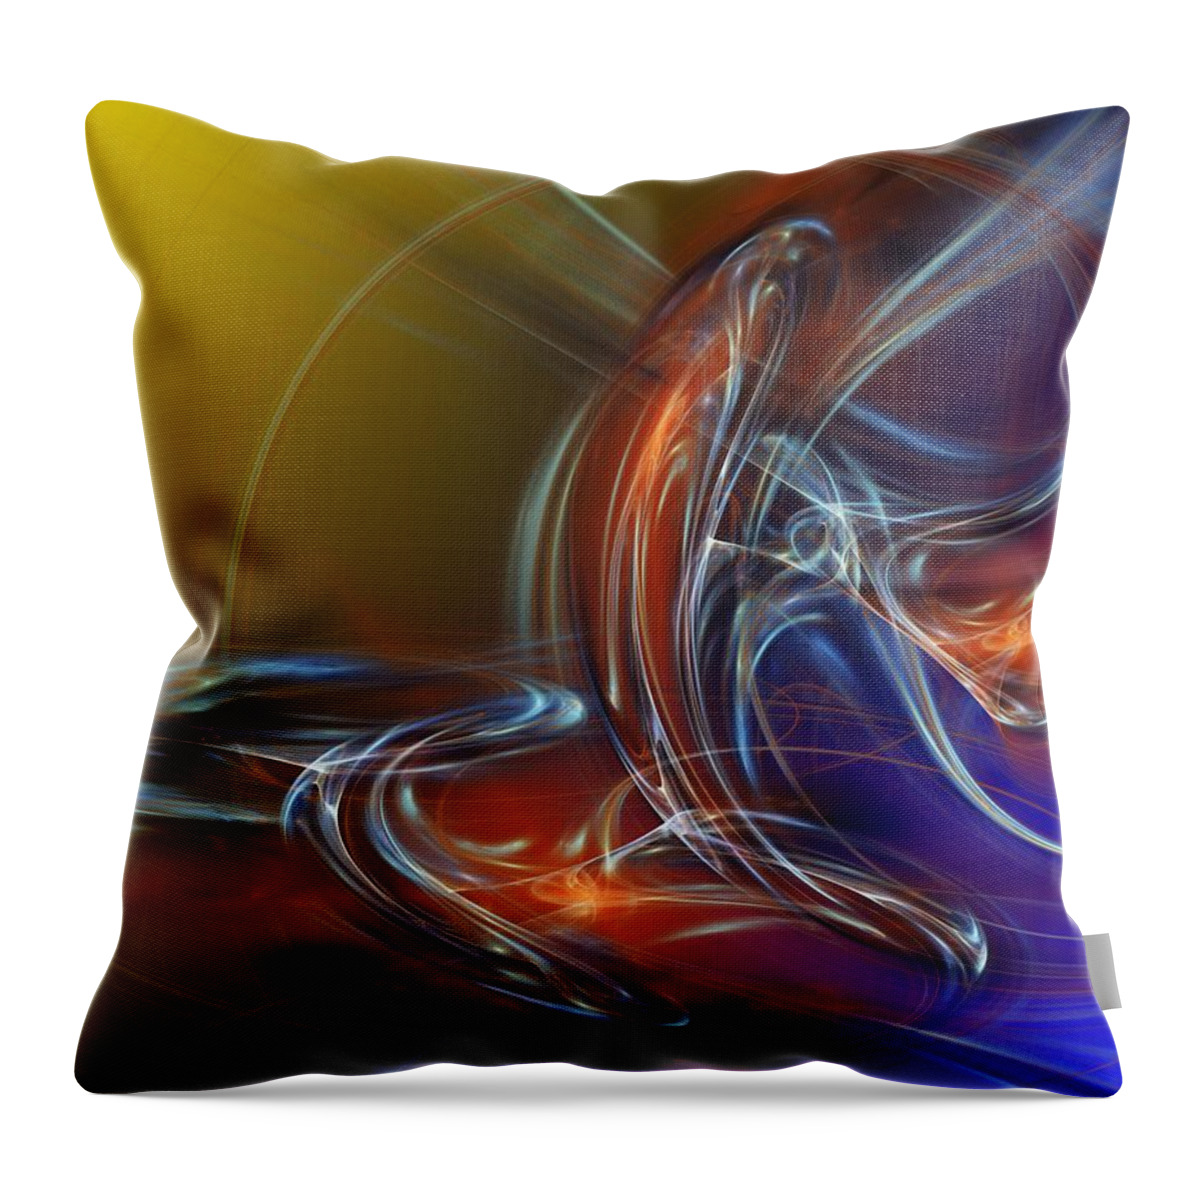 Fine Art Throw Pillow featuring the digital art Buddhist Protest by David Lane